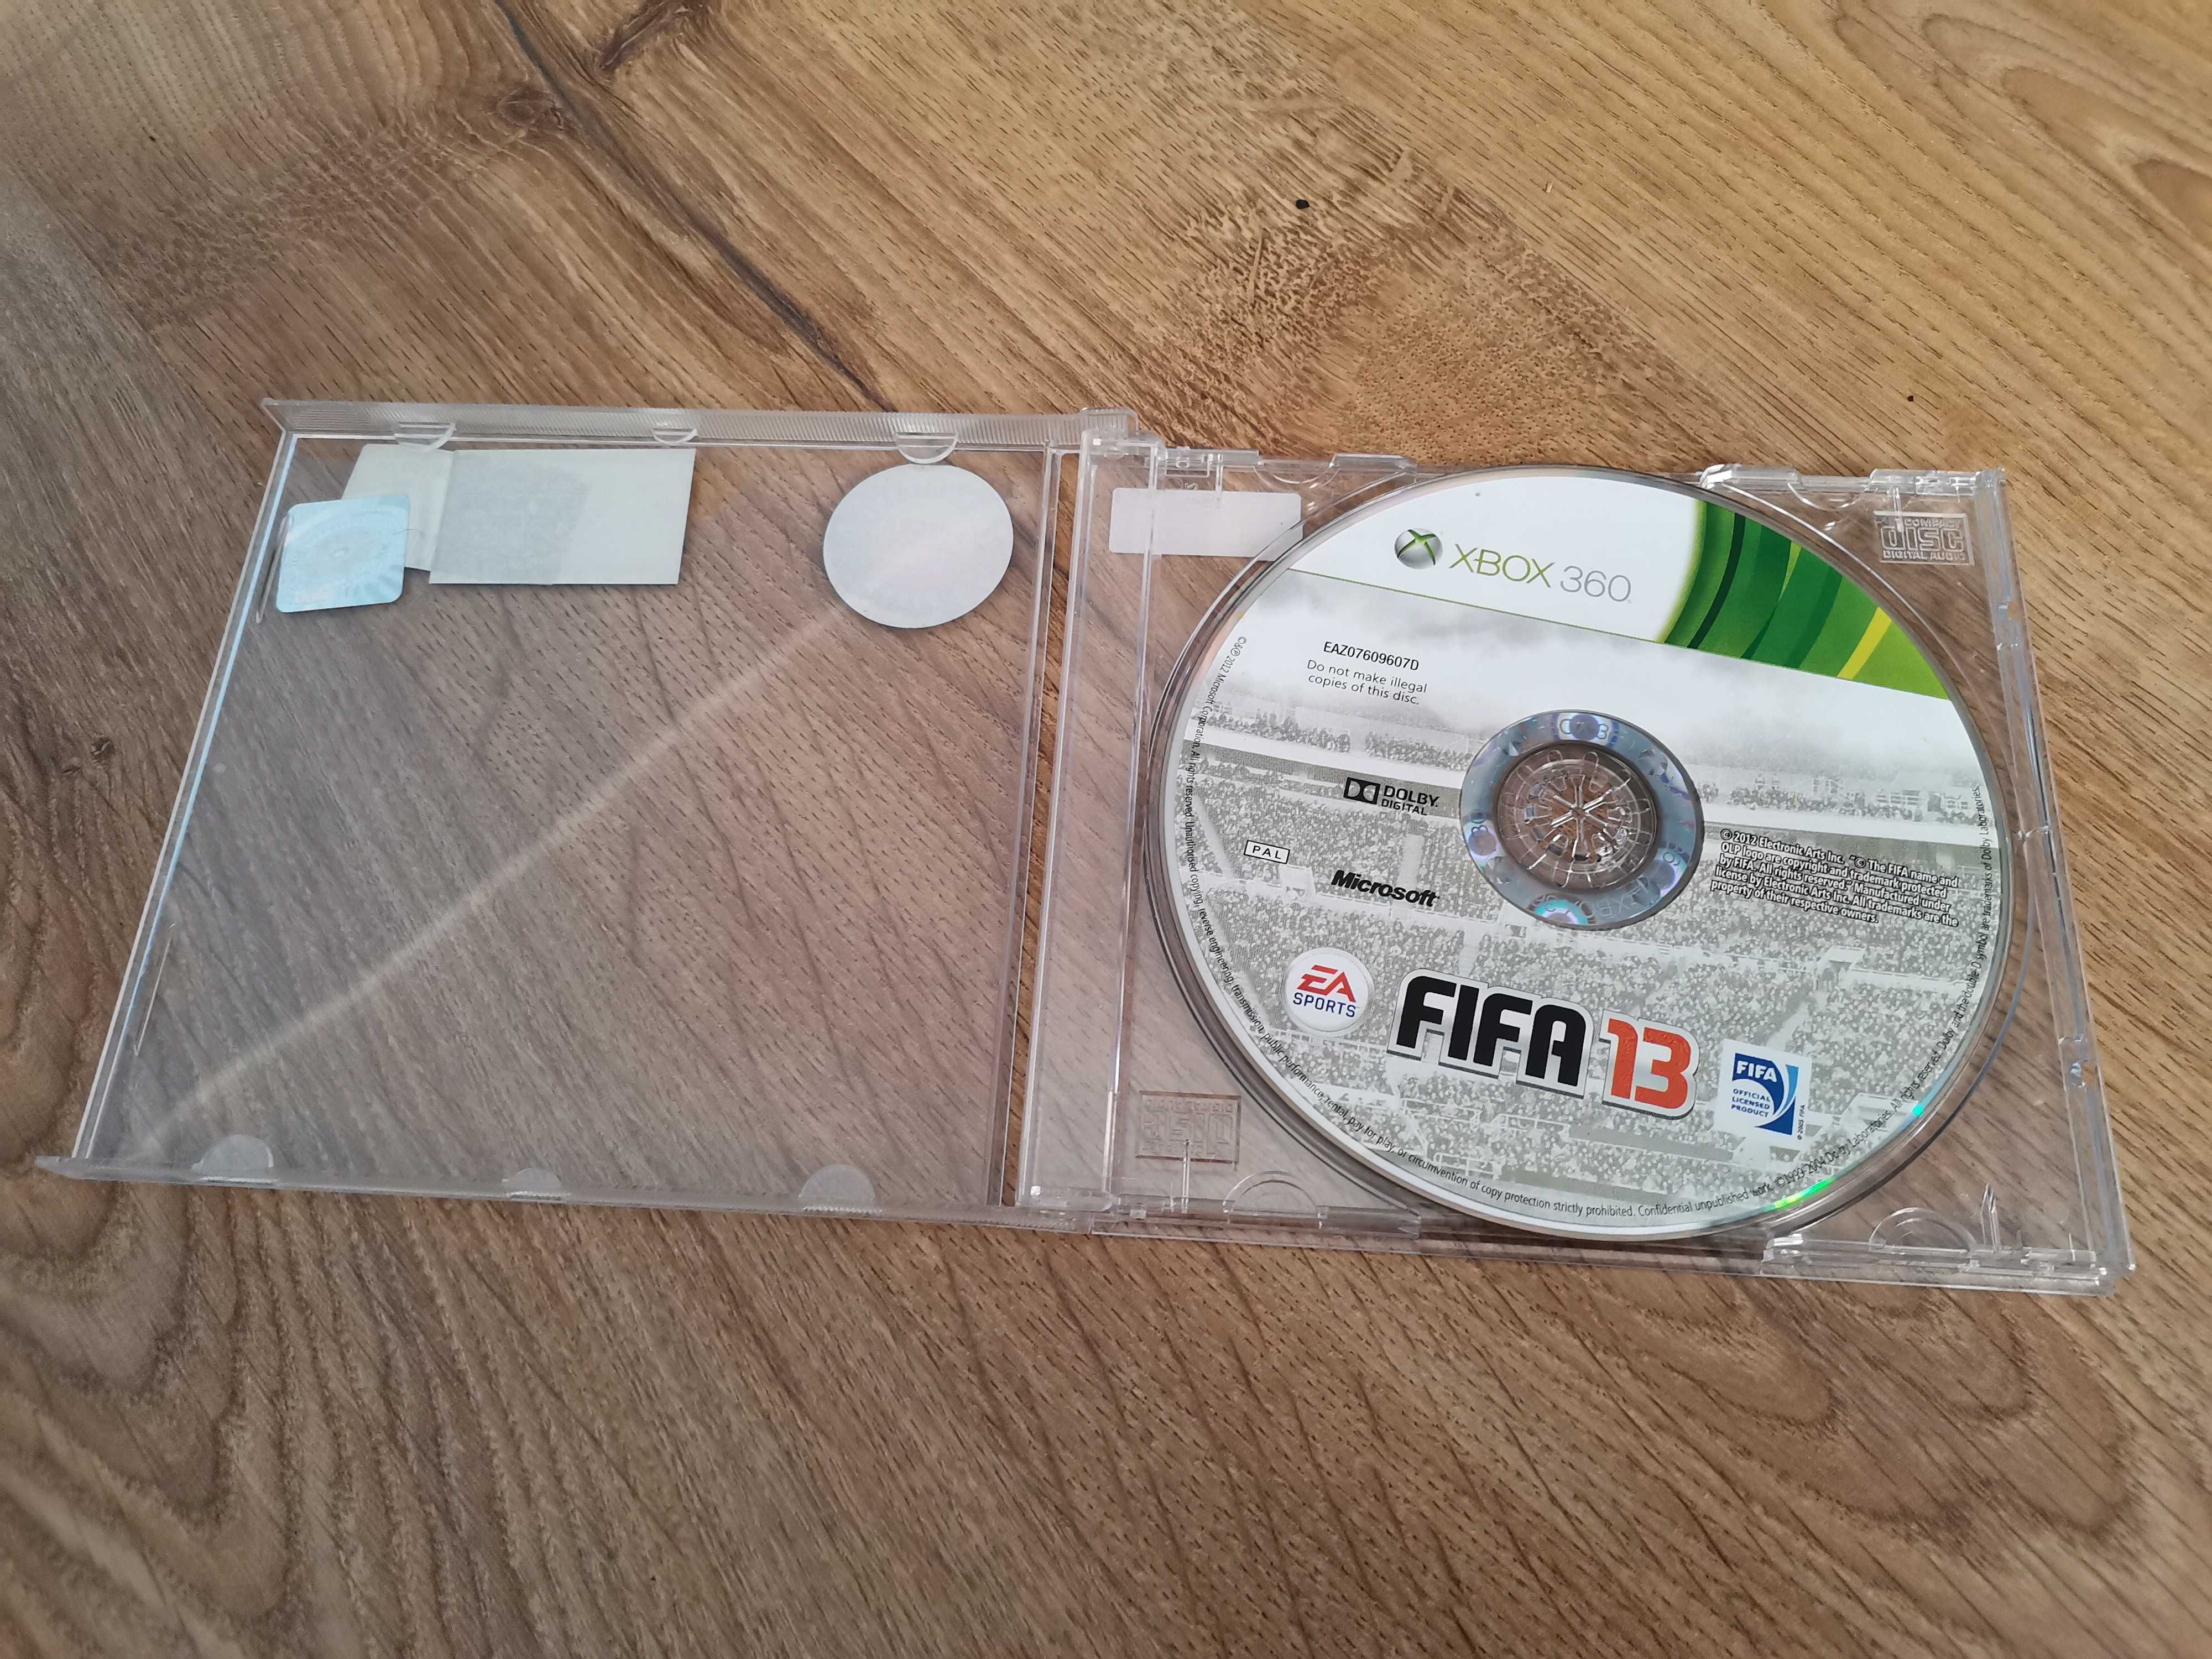 Gra FIFA 13 na konsolę XBOX 360